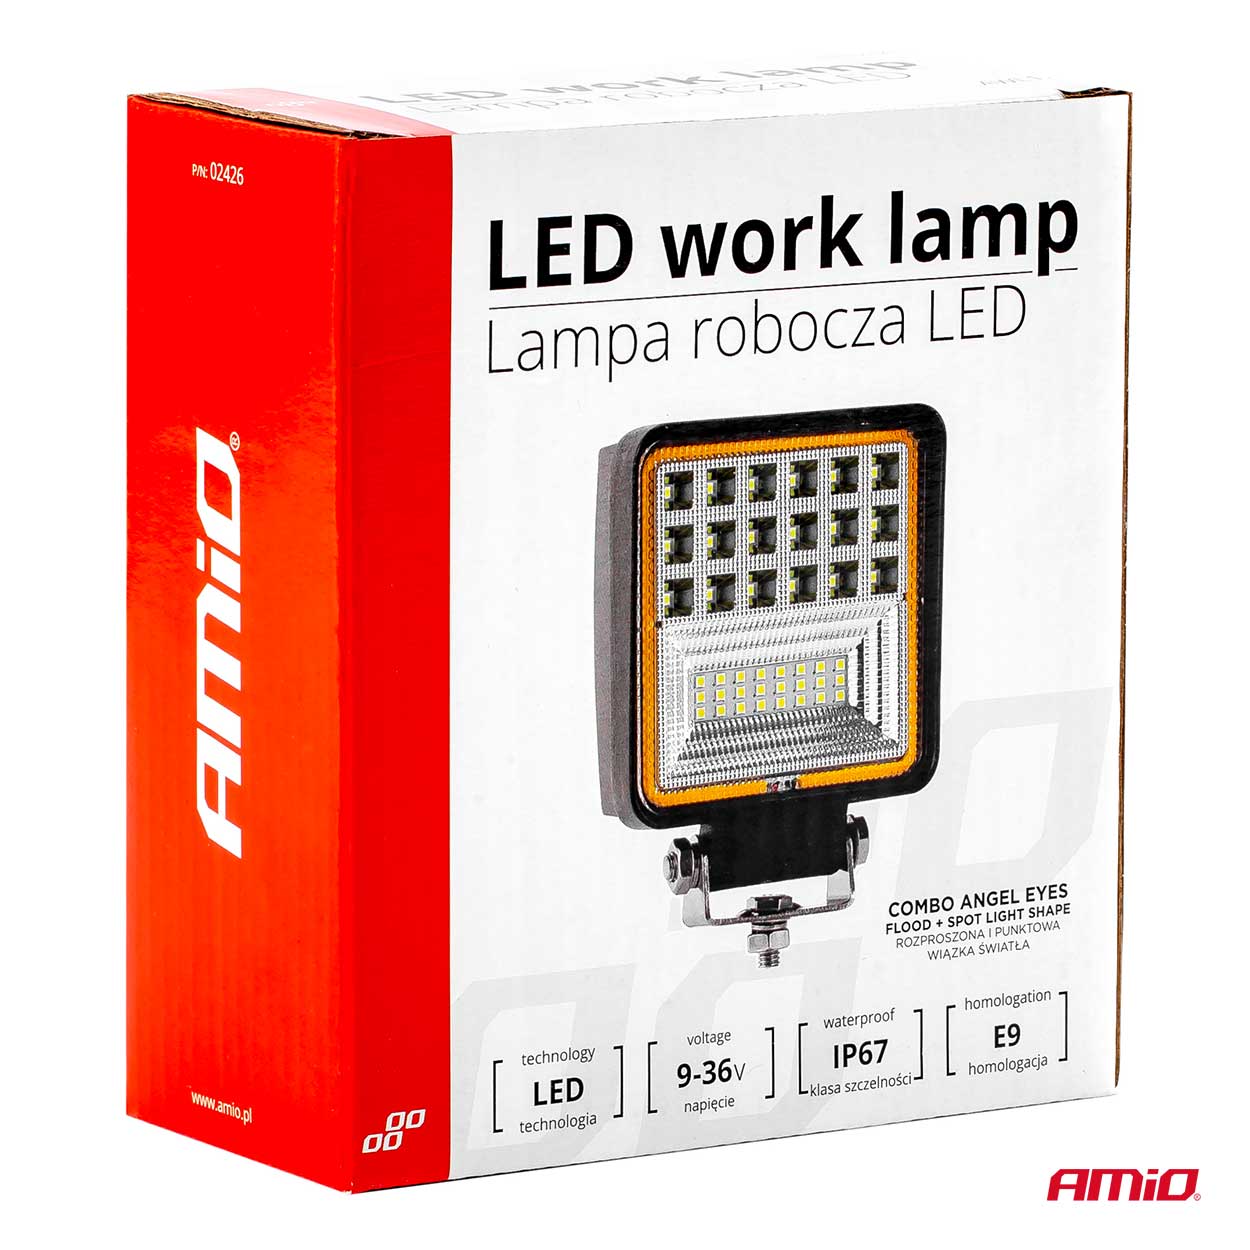 Working lamp AWL12 42 LED COMBO 2 function, 9-36V thumb